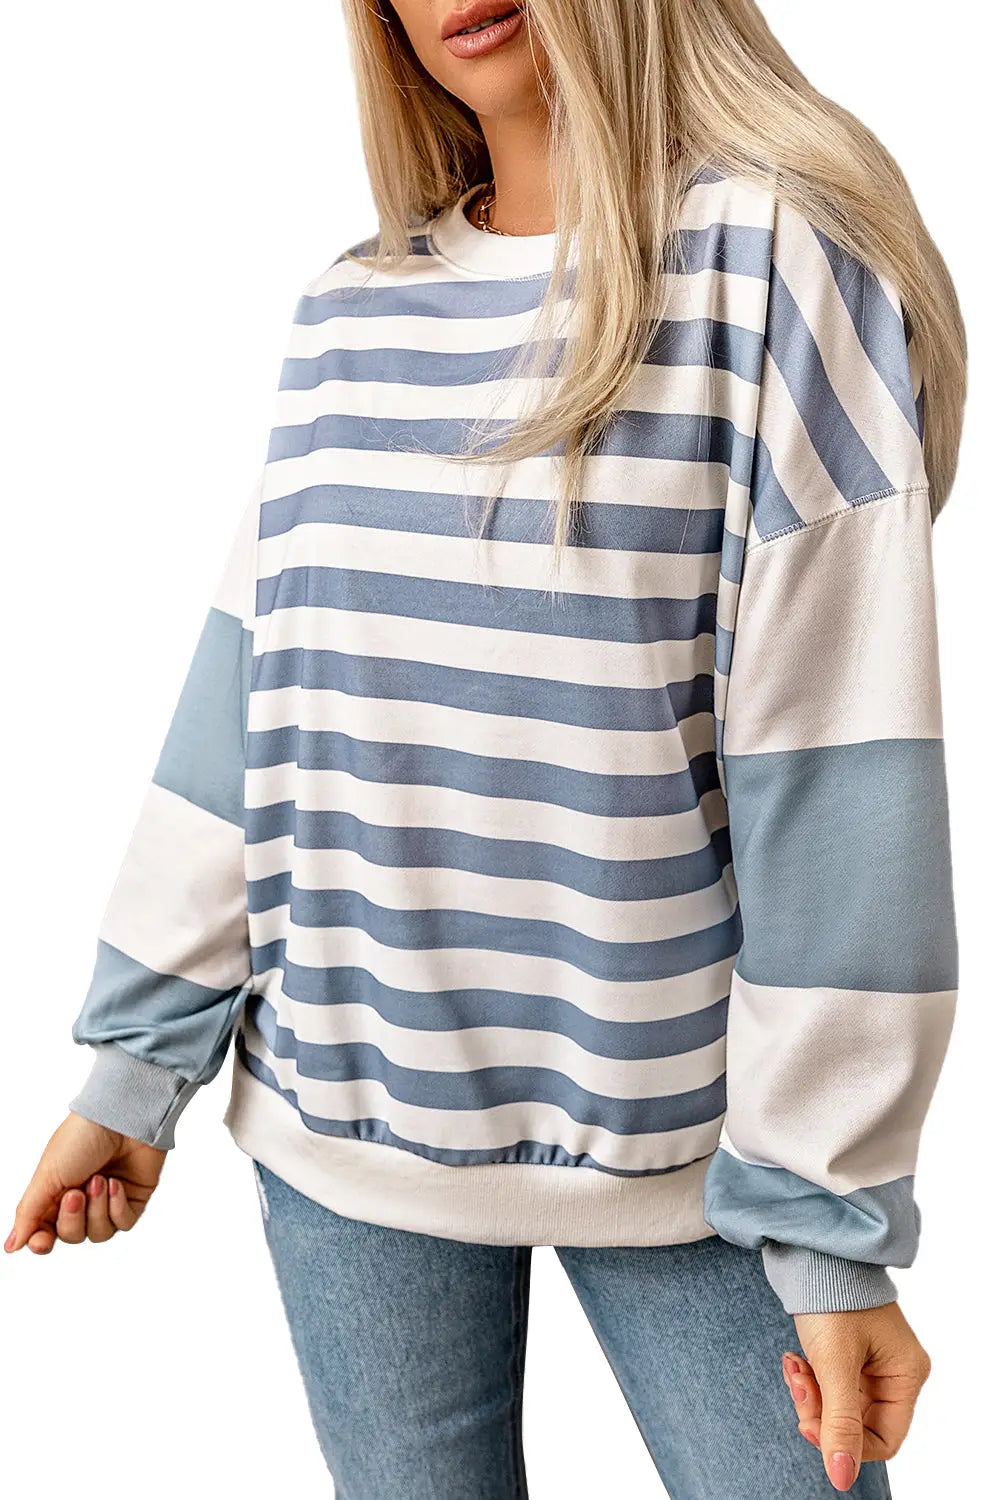 Stripe drop shoulder striped pullover sweatshirt - sweatshirts & hoodies